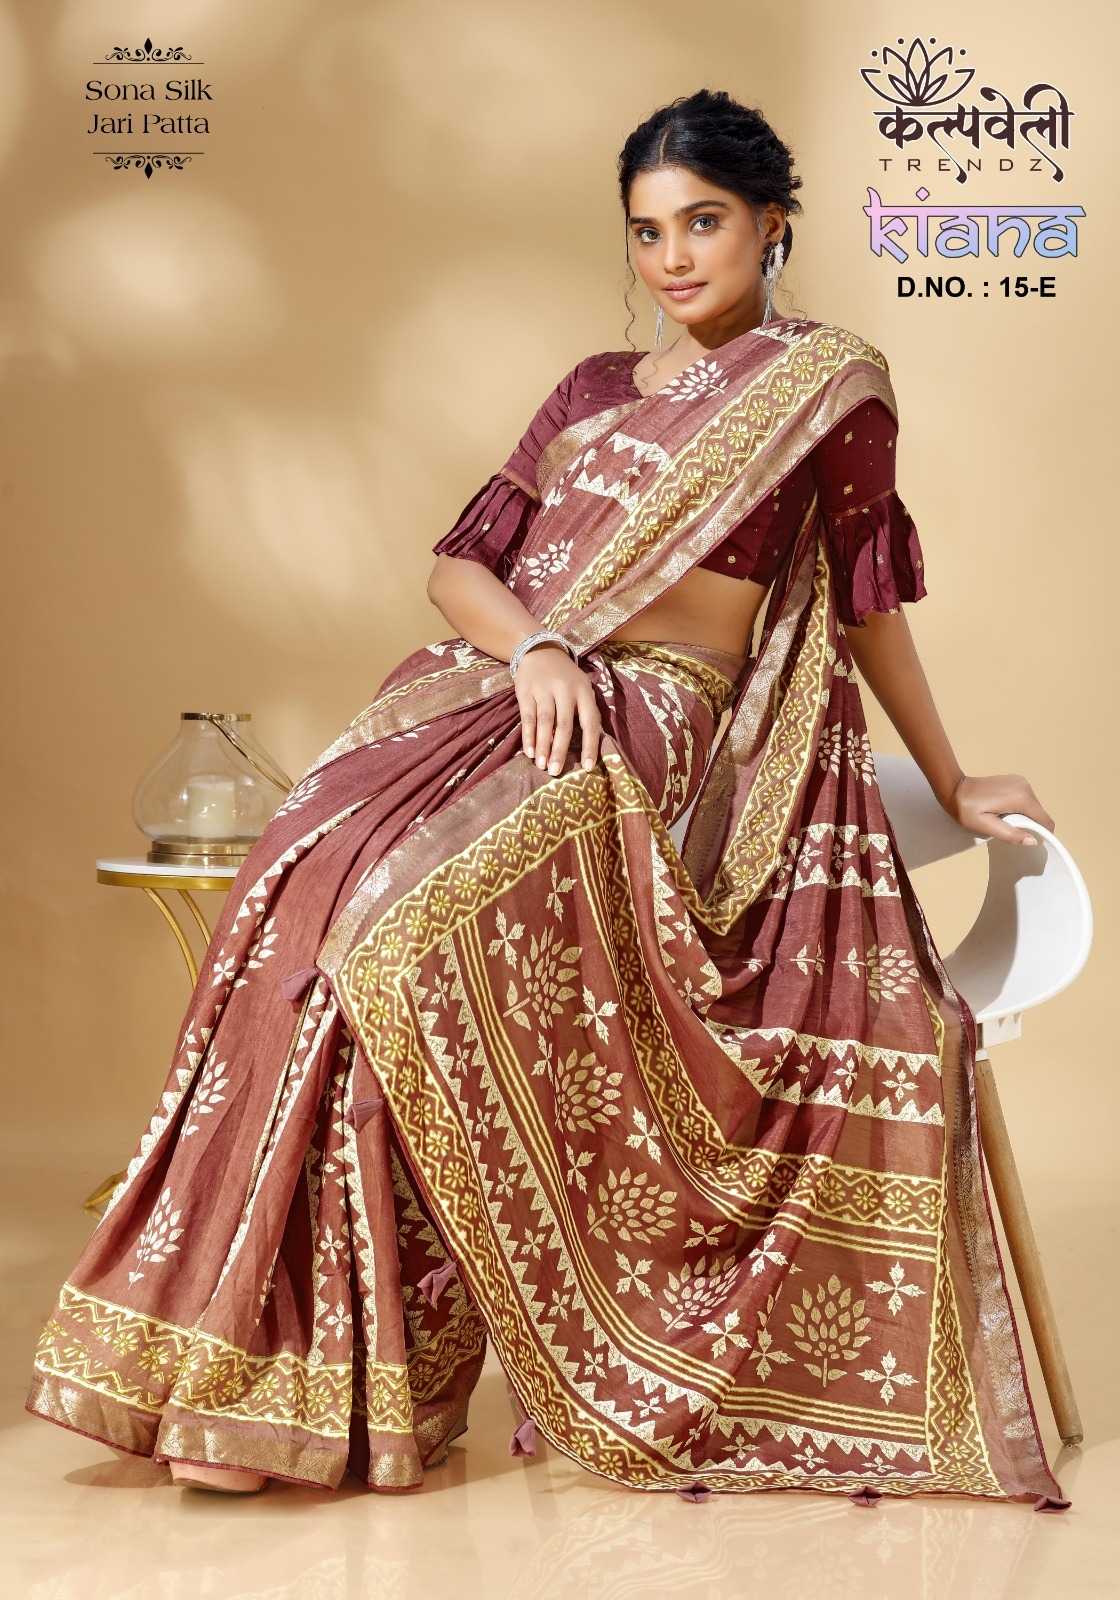 kalpavelly trendz kiana 15 beautiful casual wear saree